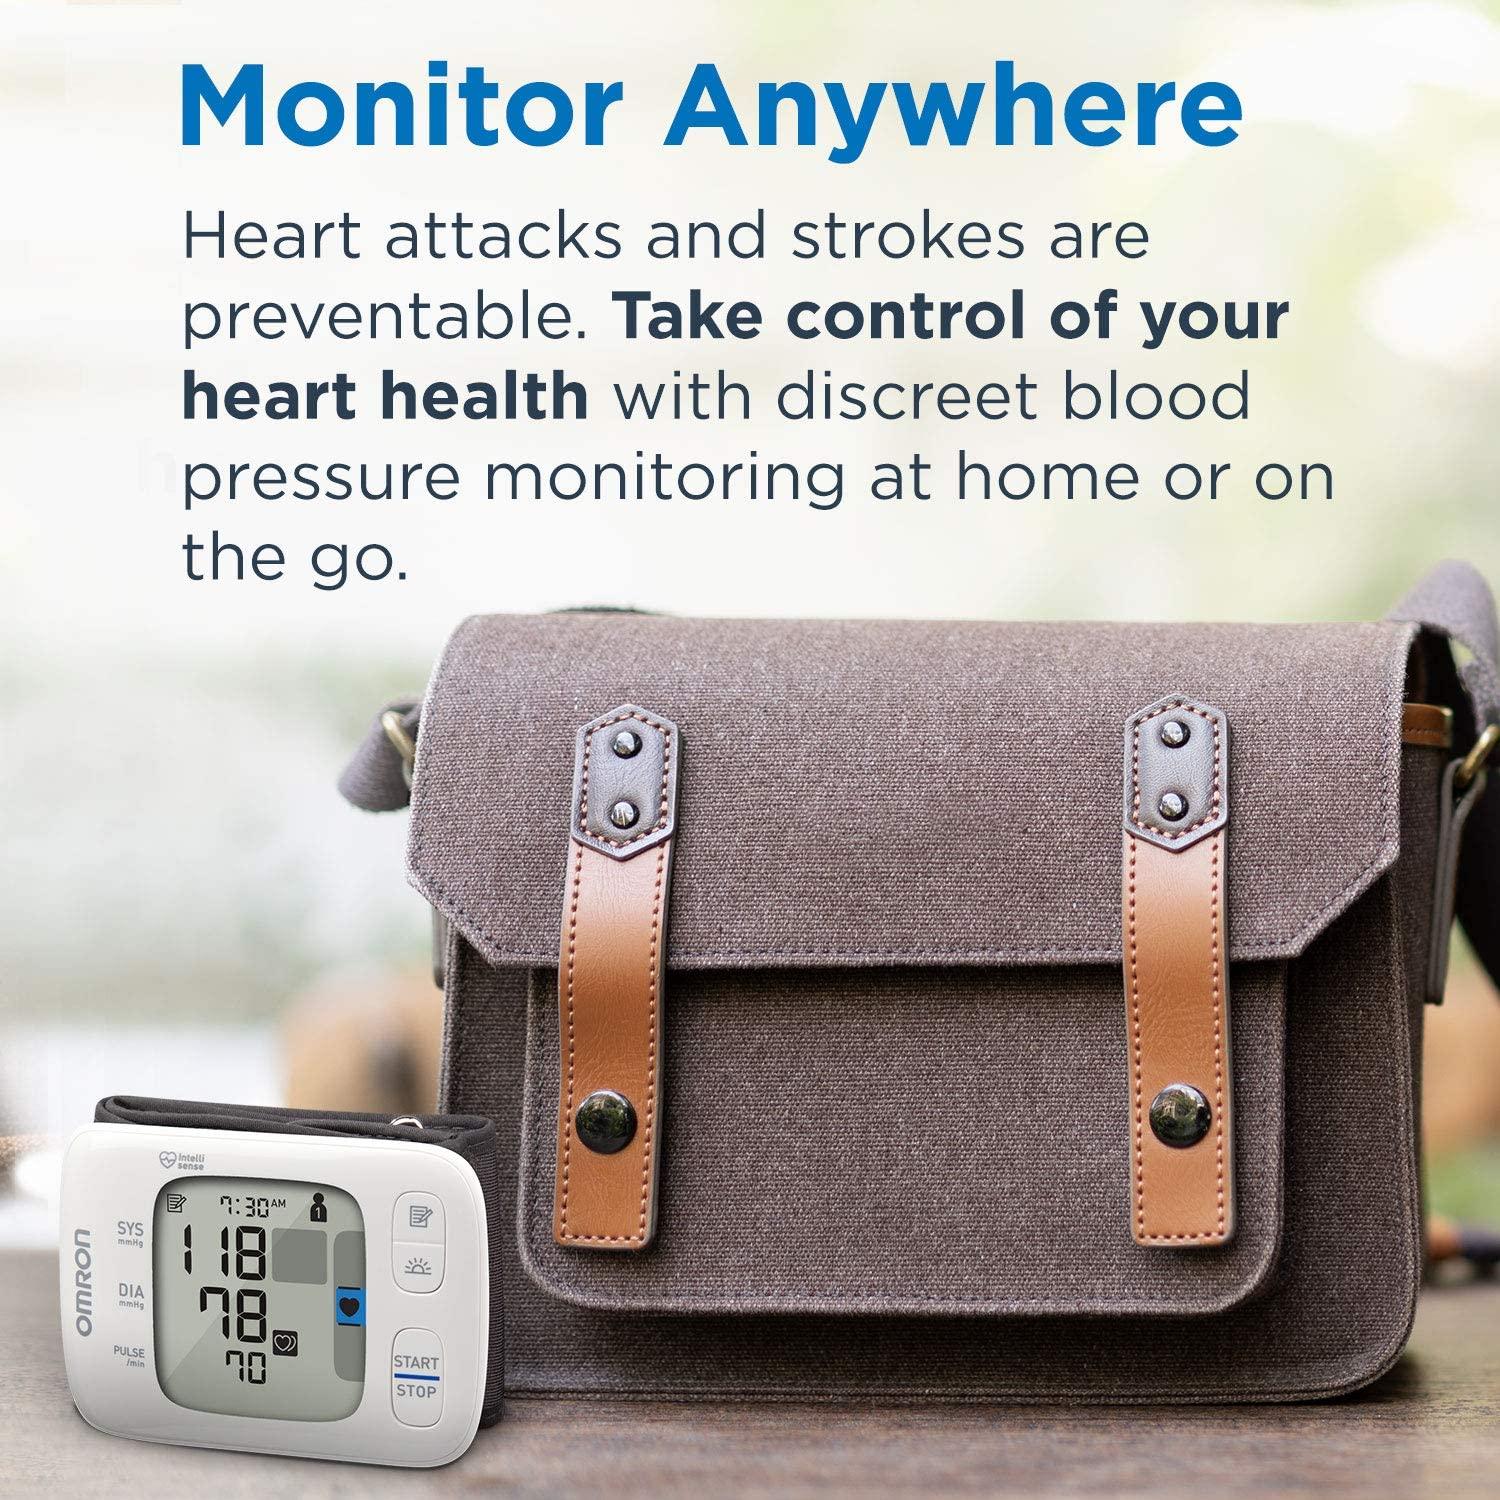 OMRON Gold Wrist Blood Pressure Monitor | Wireless